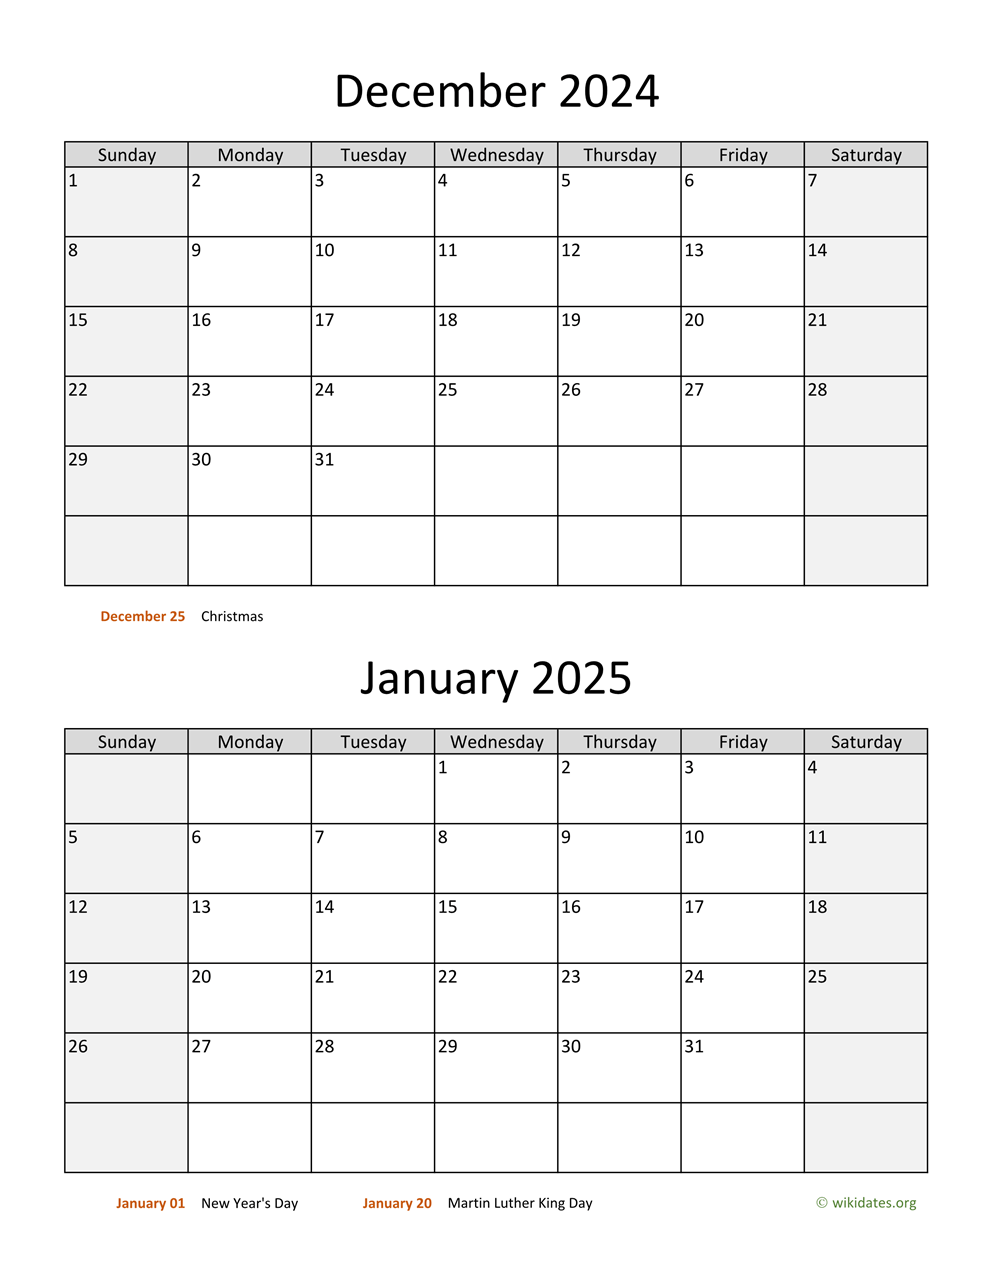 December 2024 and January 2025 Calendar | WikiDates.org